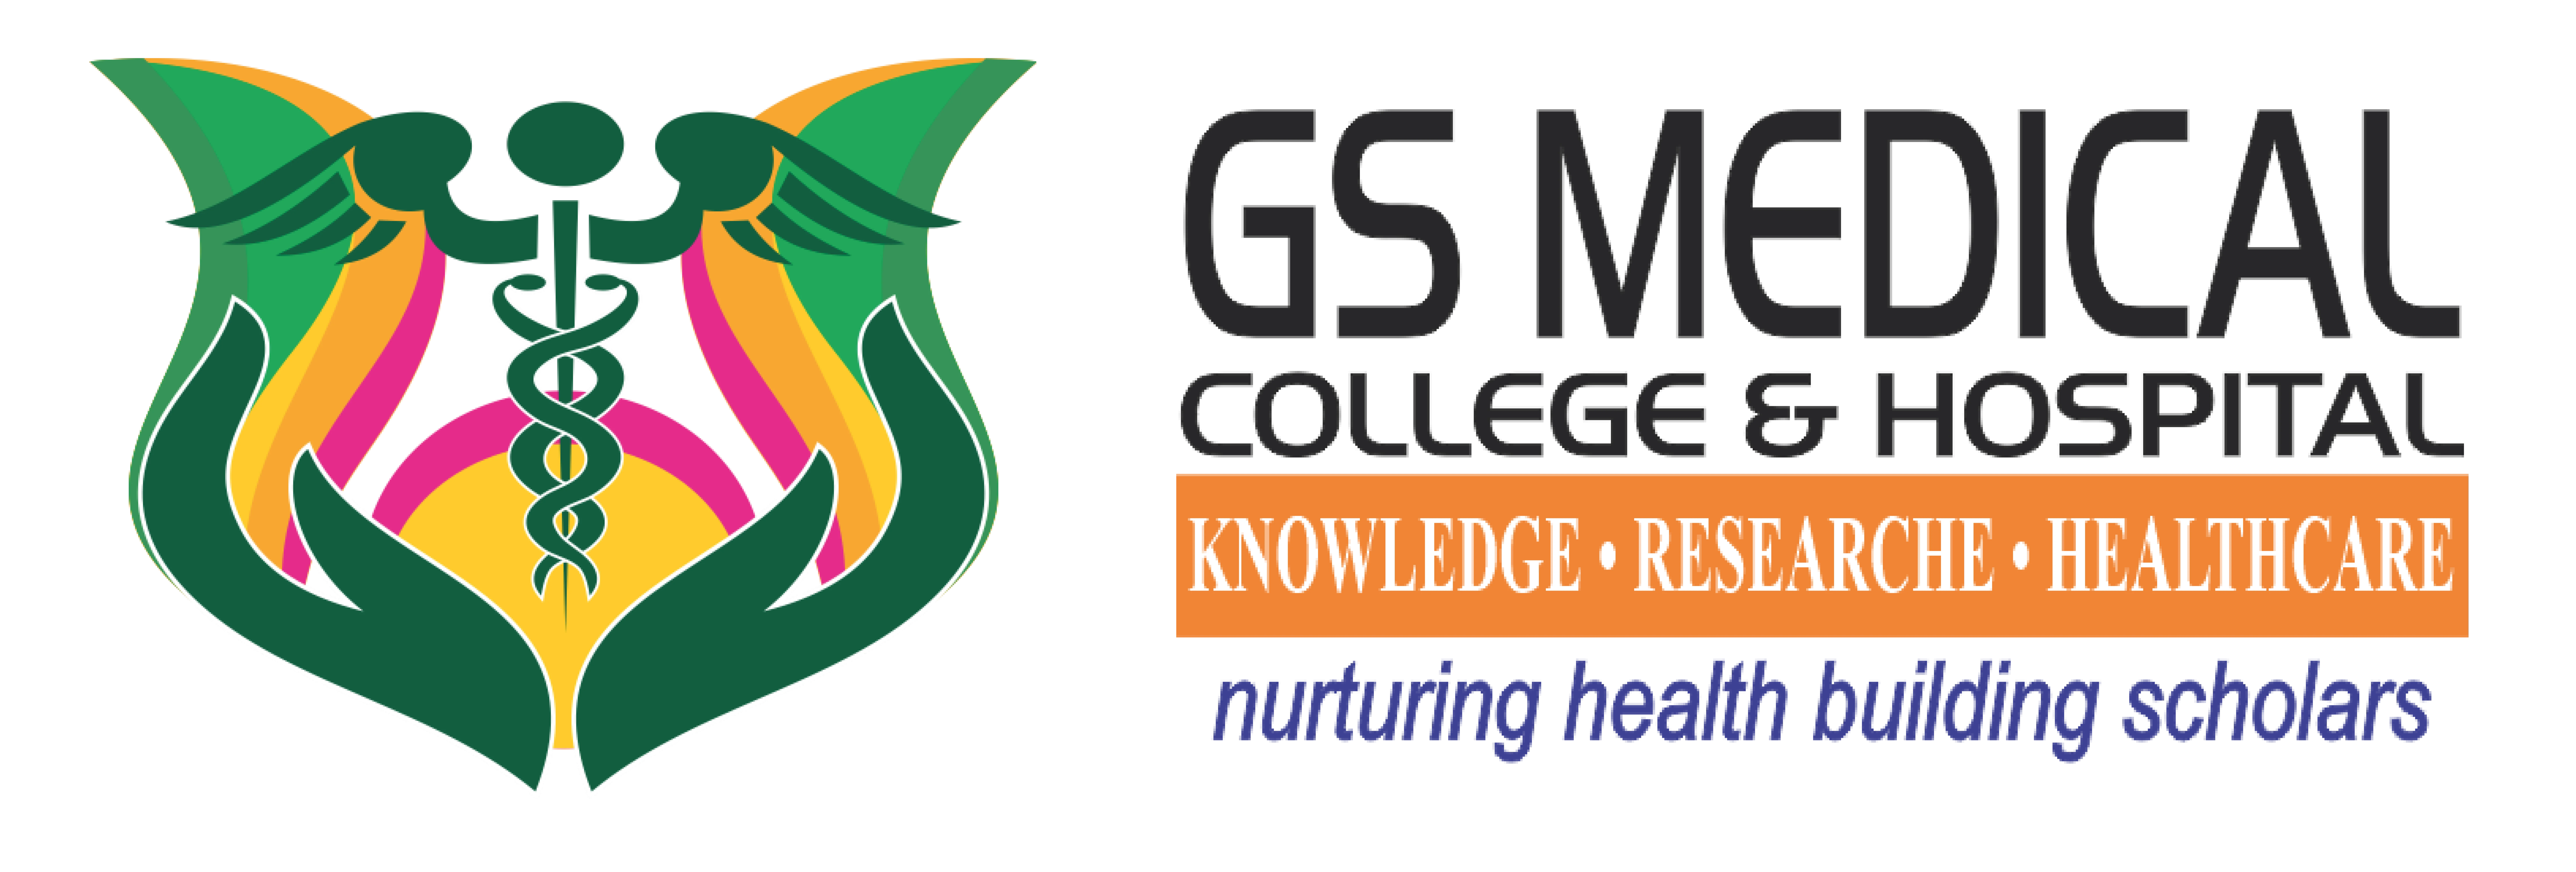 gs medical college logo